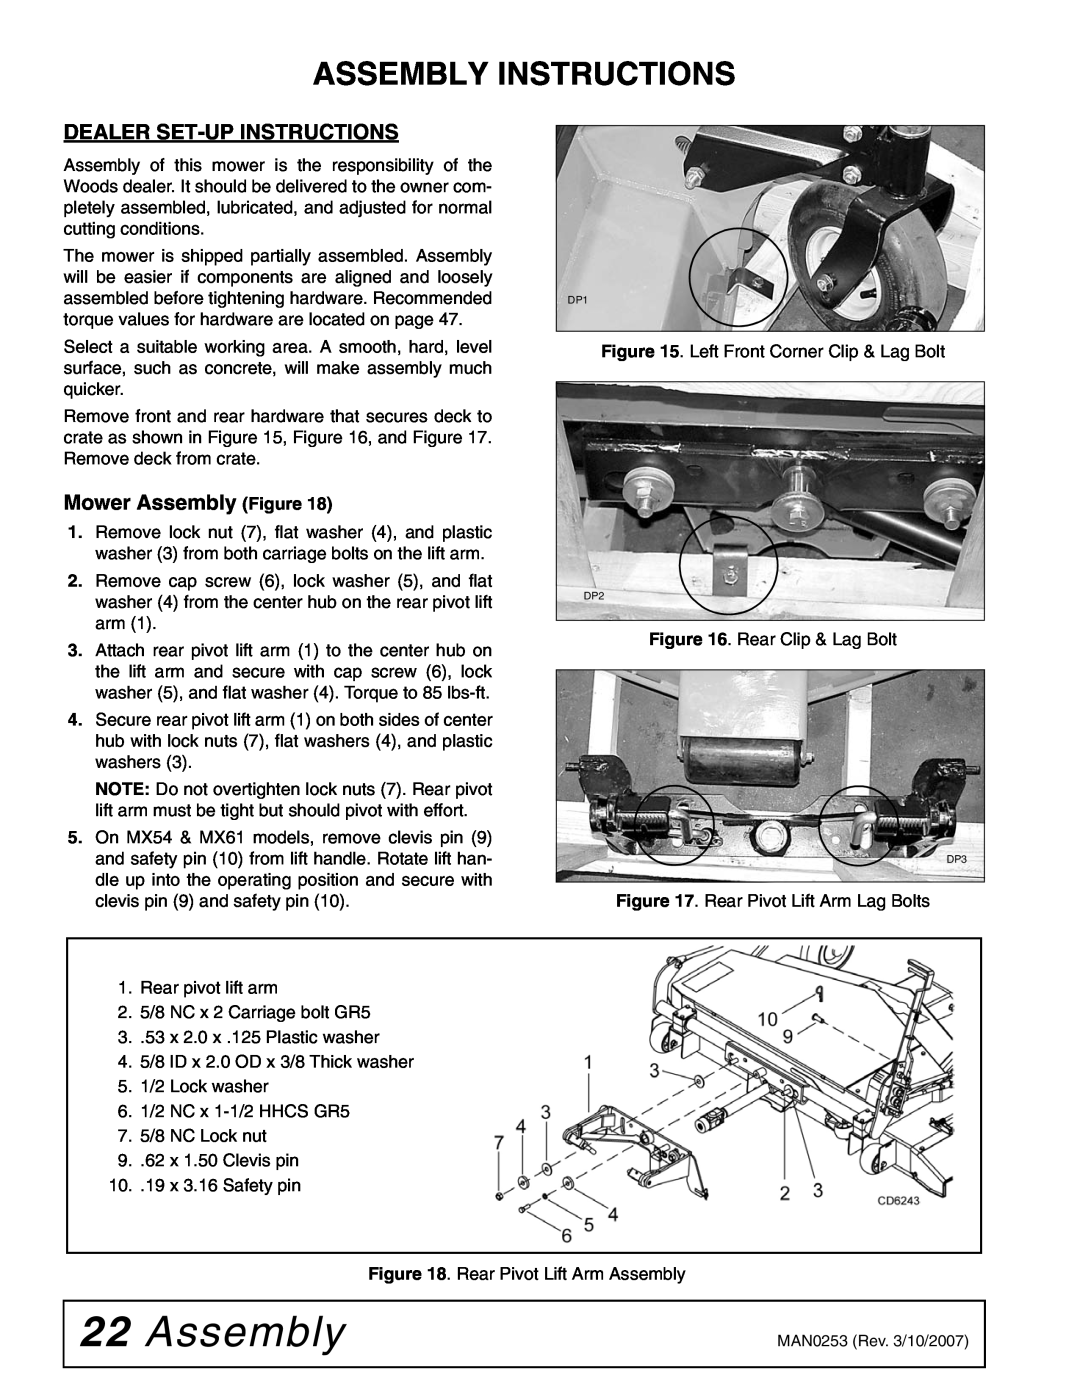 Woods Equipment MX61T, MX54T manual Assembly Instructions, Dealer Set-Up Instructions, Mower Assembly Figure 